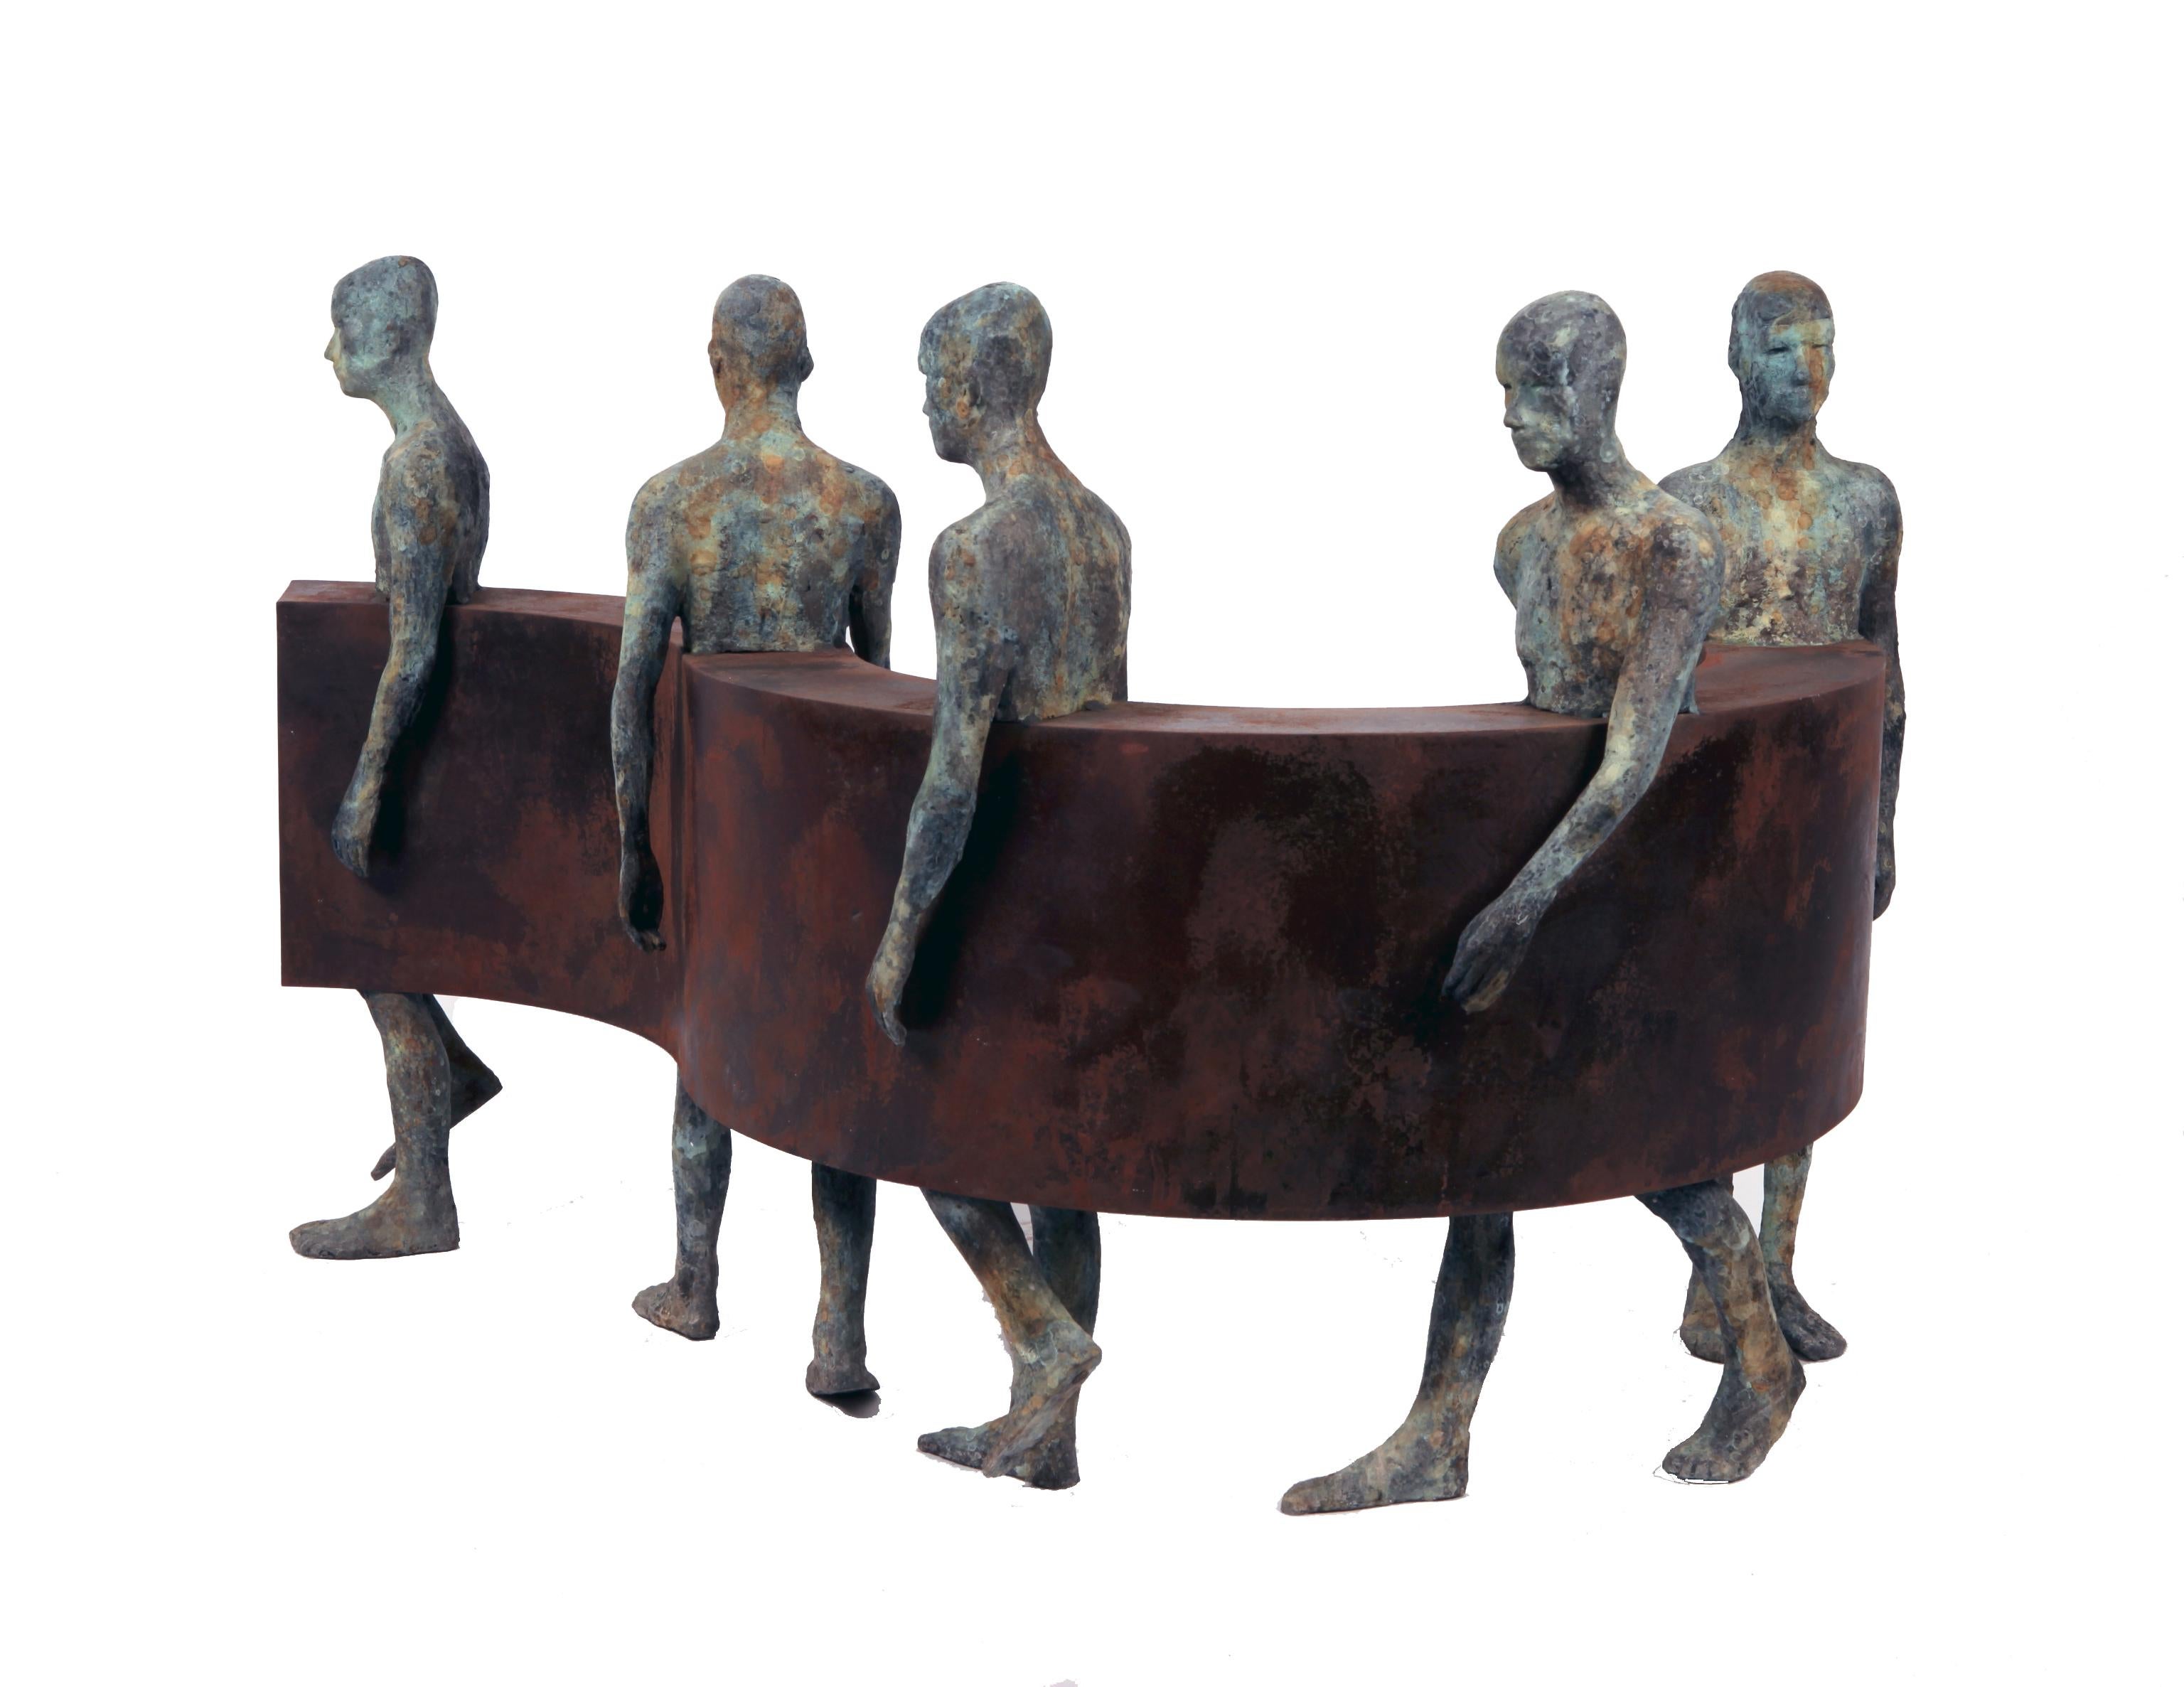 Jesus Curia Perez Abstract Sculpture - Sin Fin IV - Five Bronze Figures Walking Along a Steel Wave, Sculpture